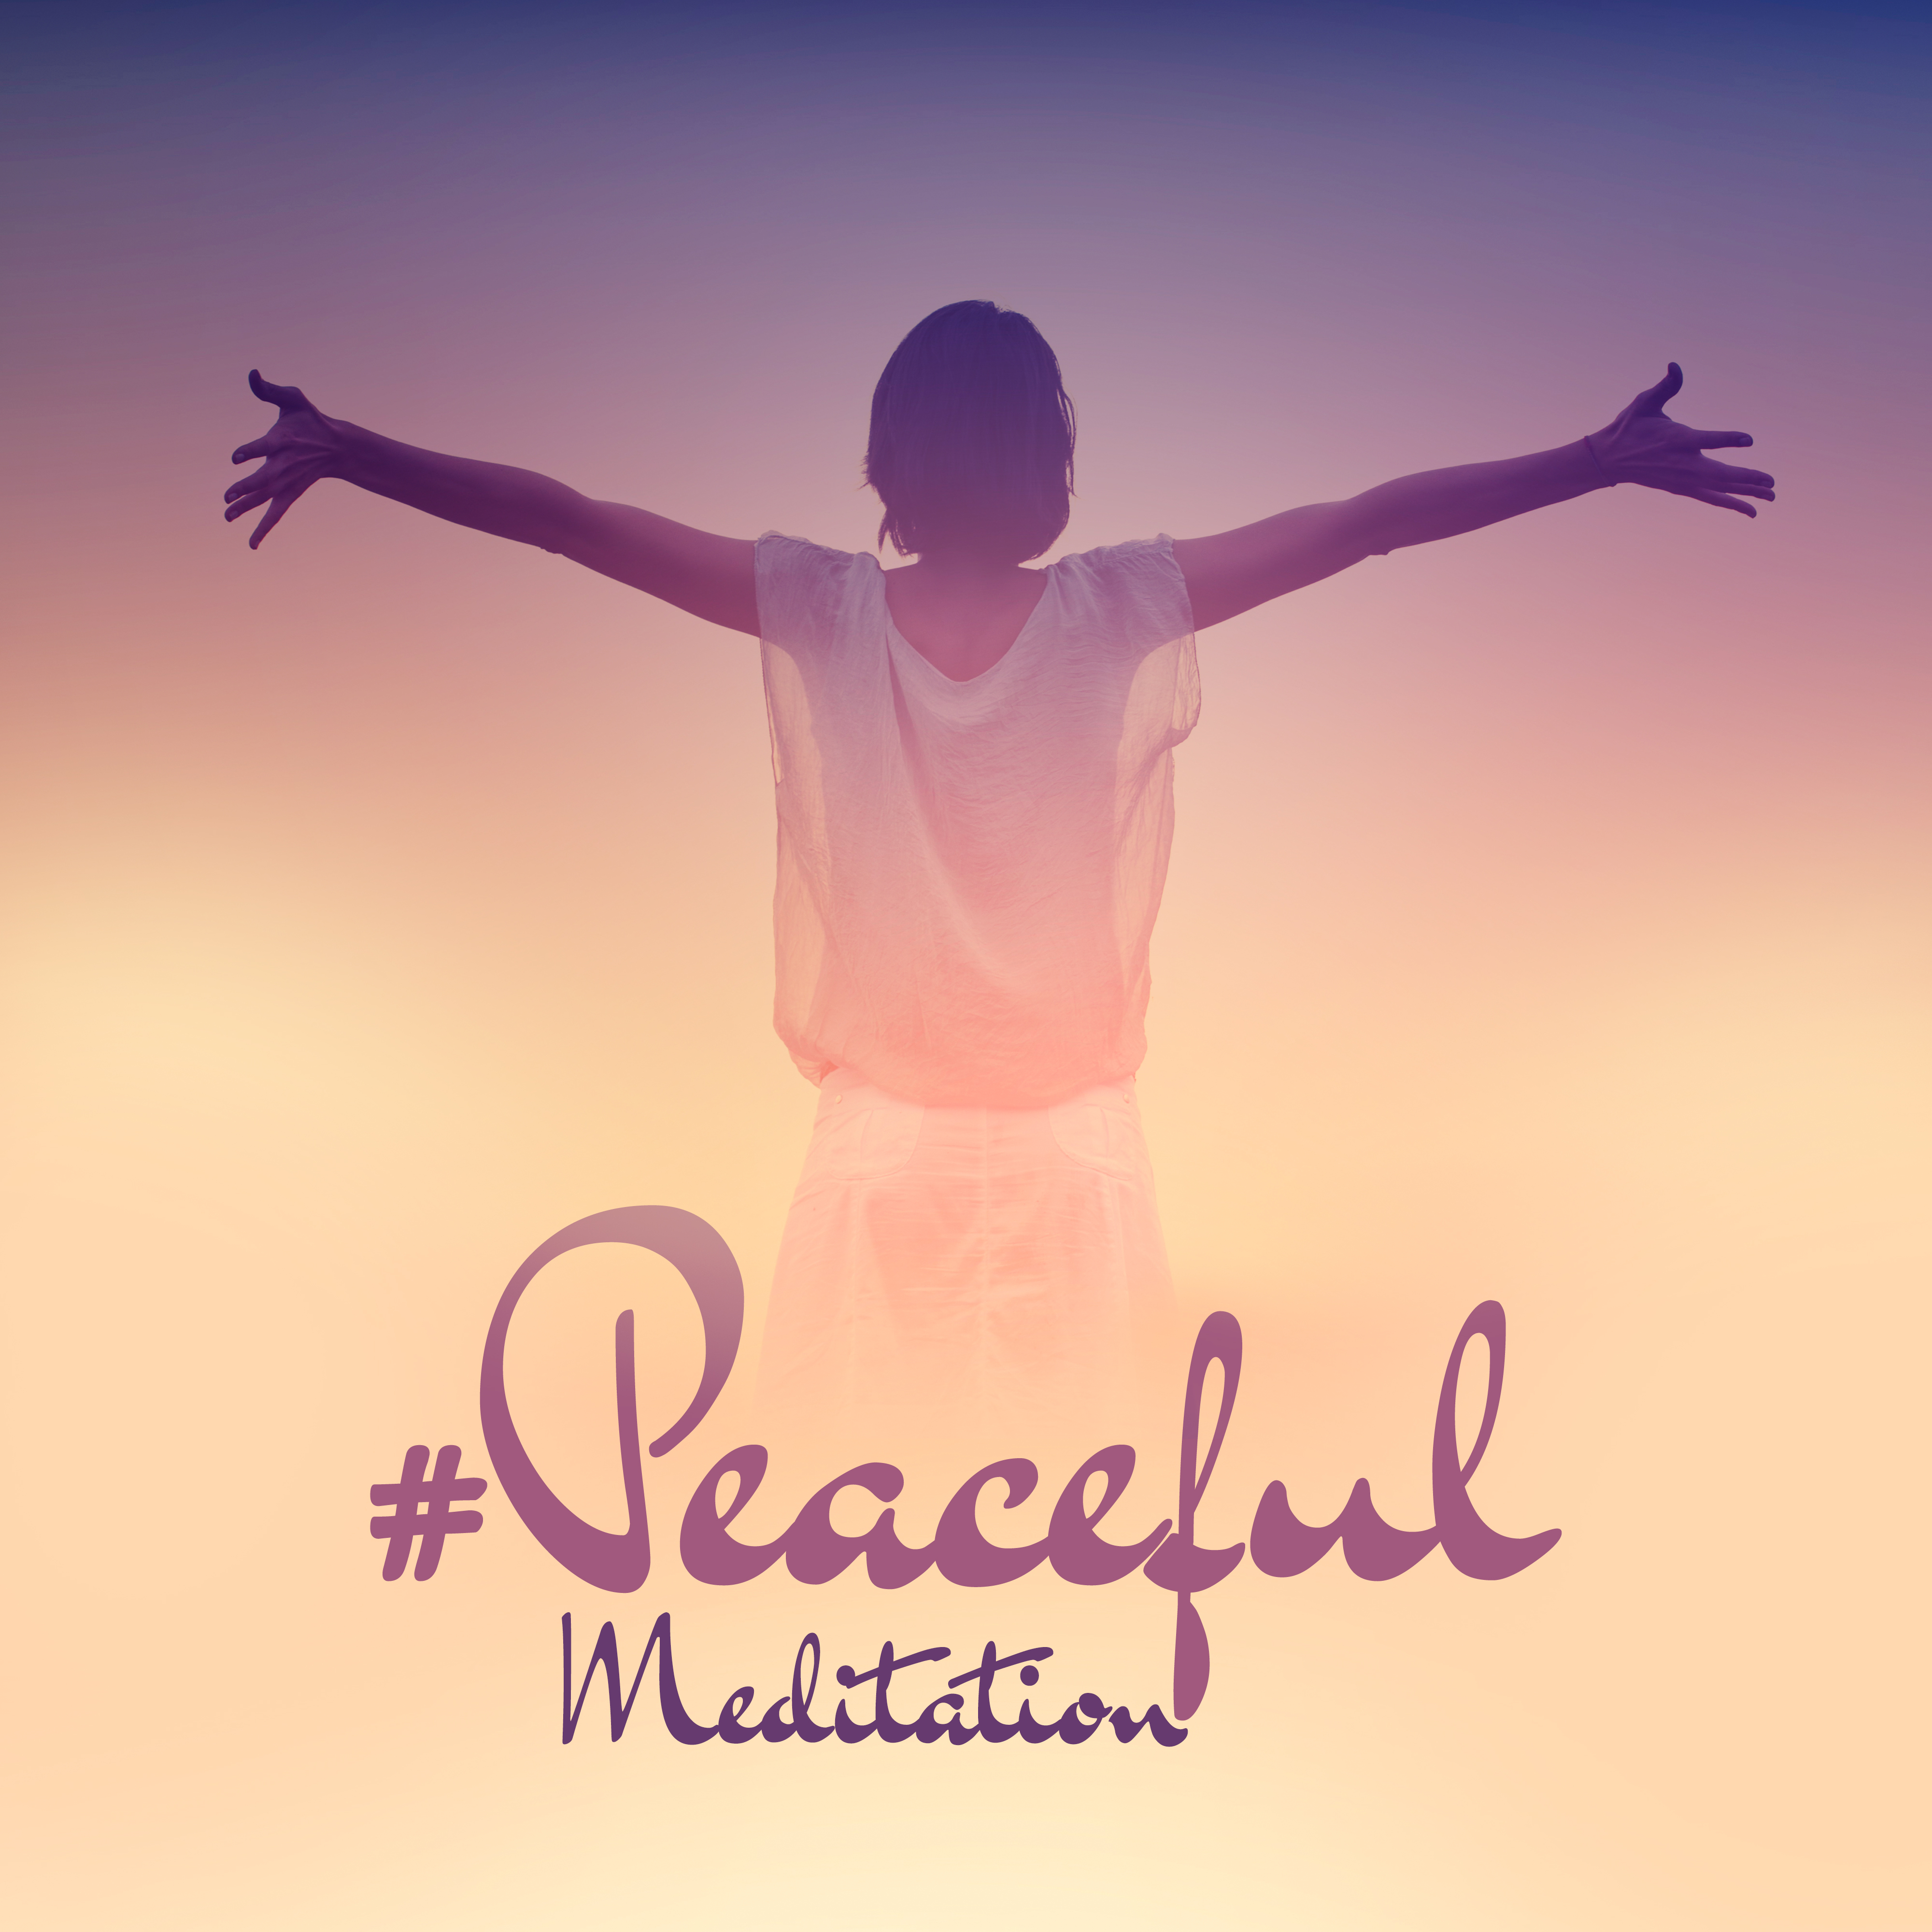 #Peaceful Meditation